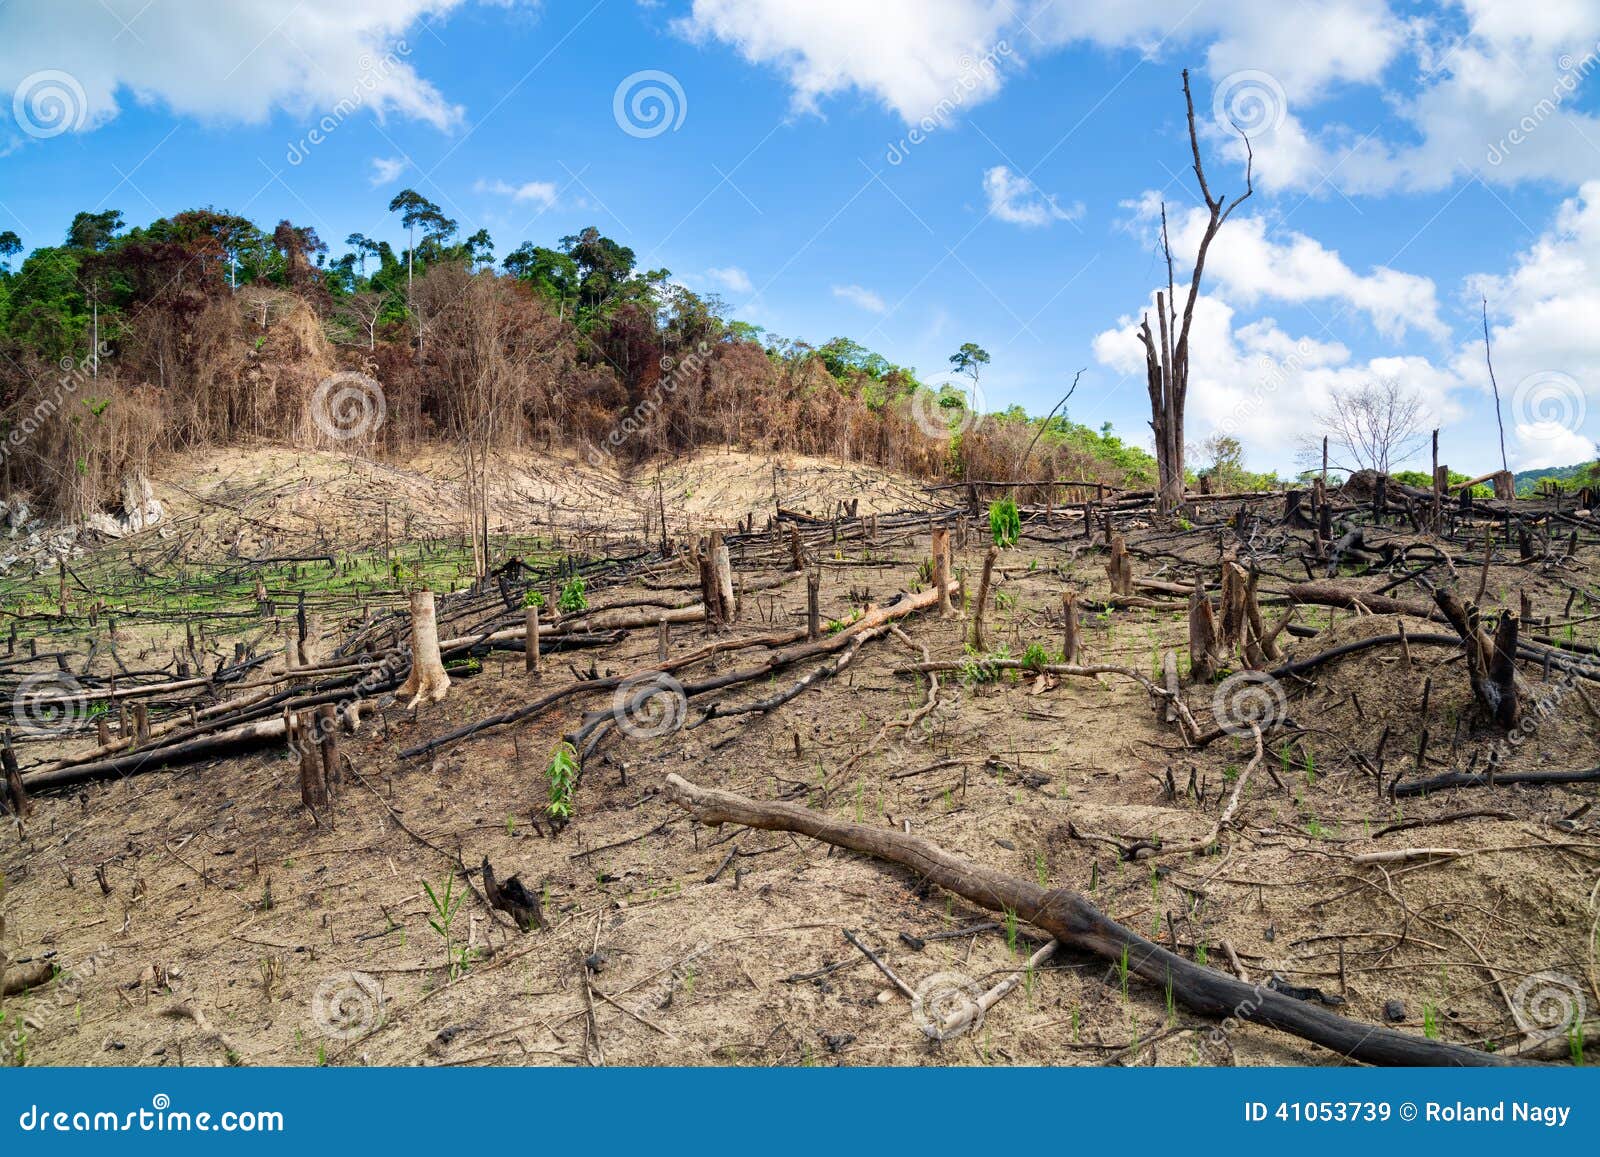 deforestation in the philippines